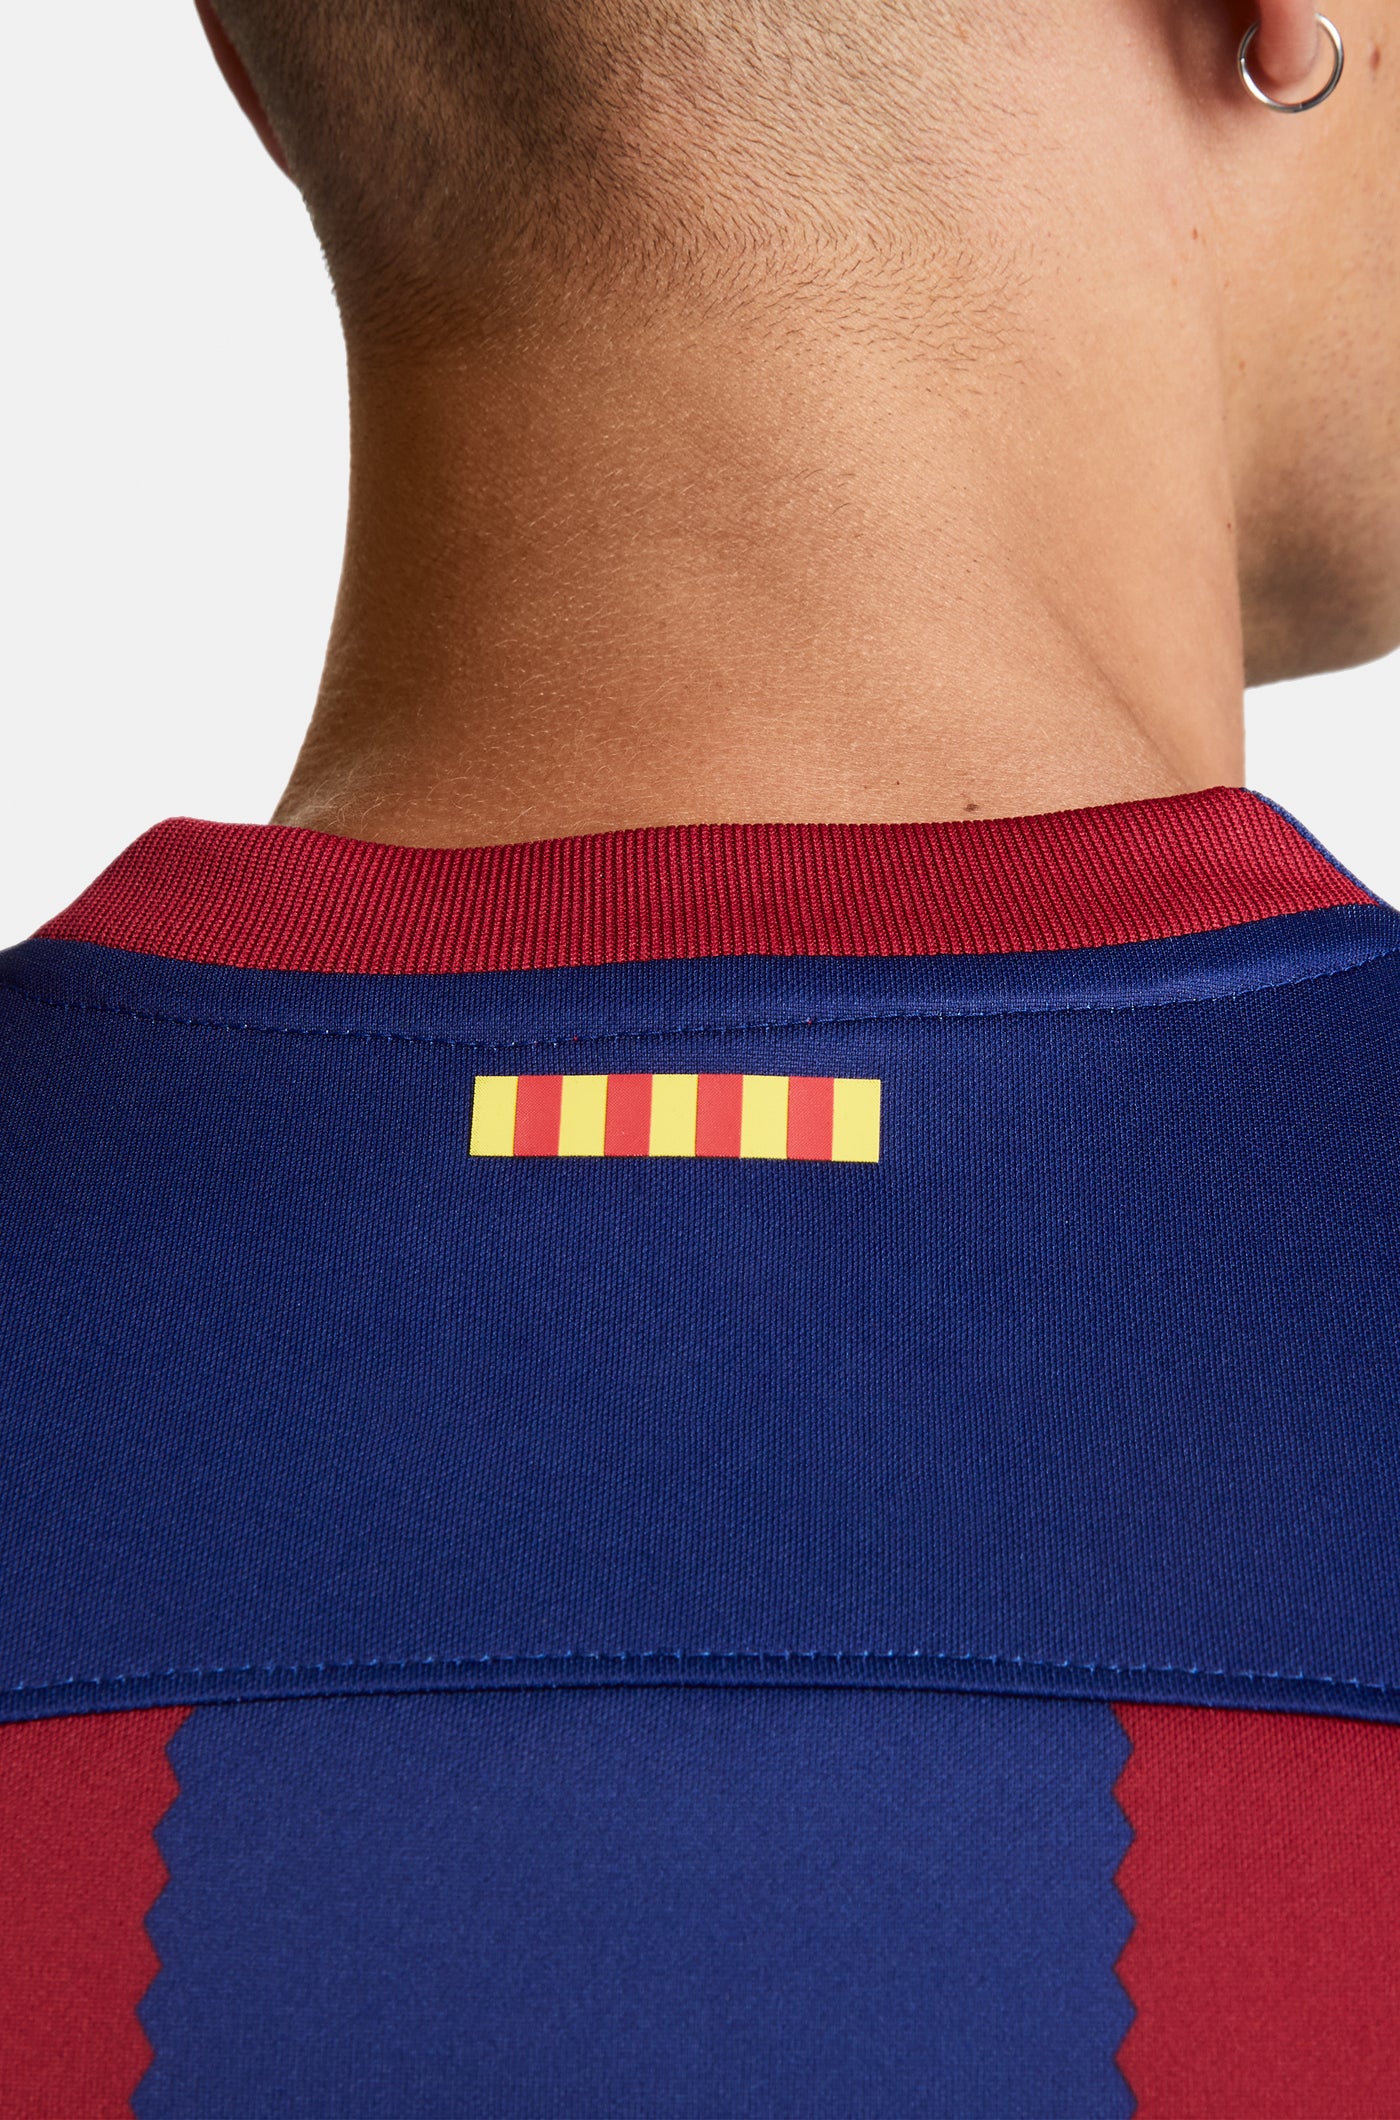 LFP FC Barcelona home shirt 23/24